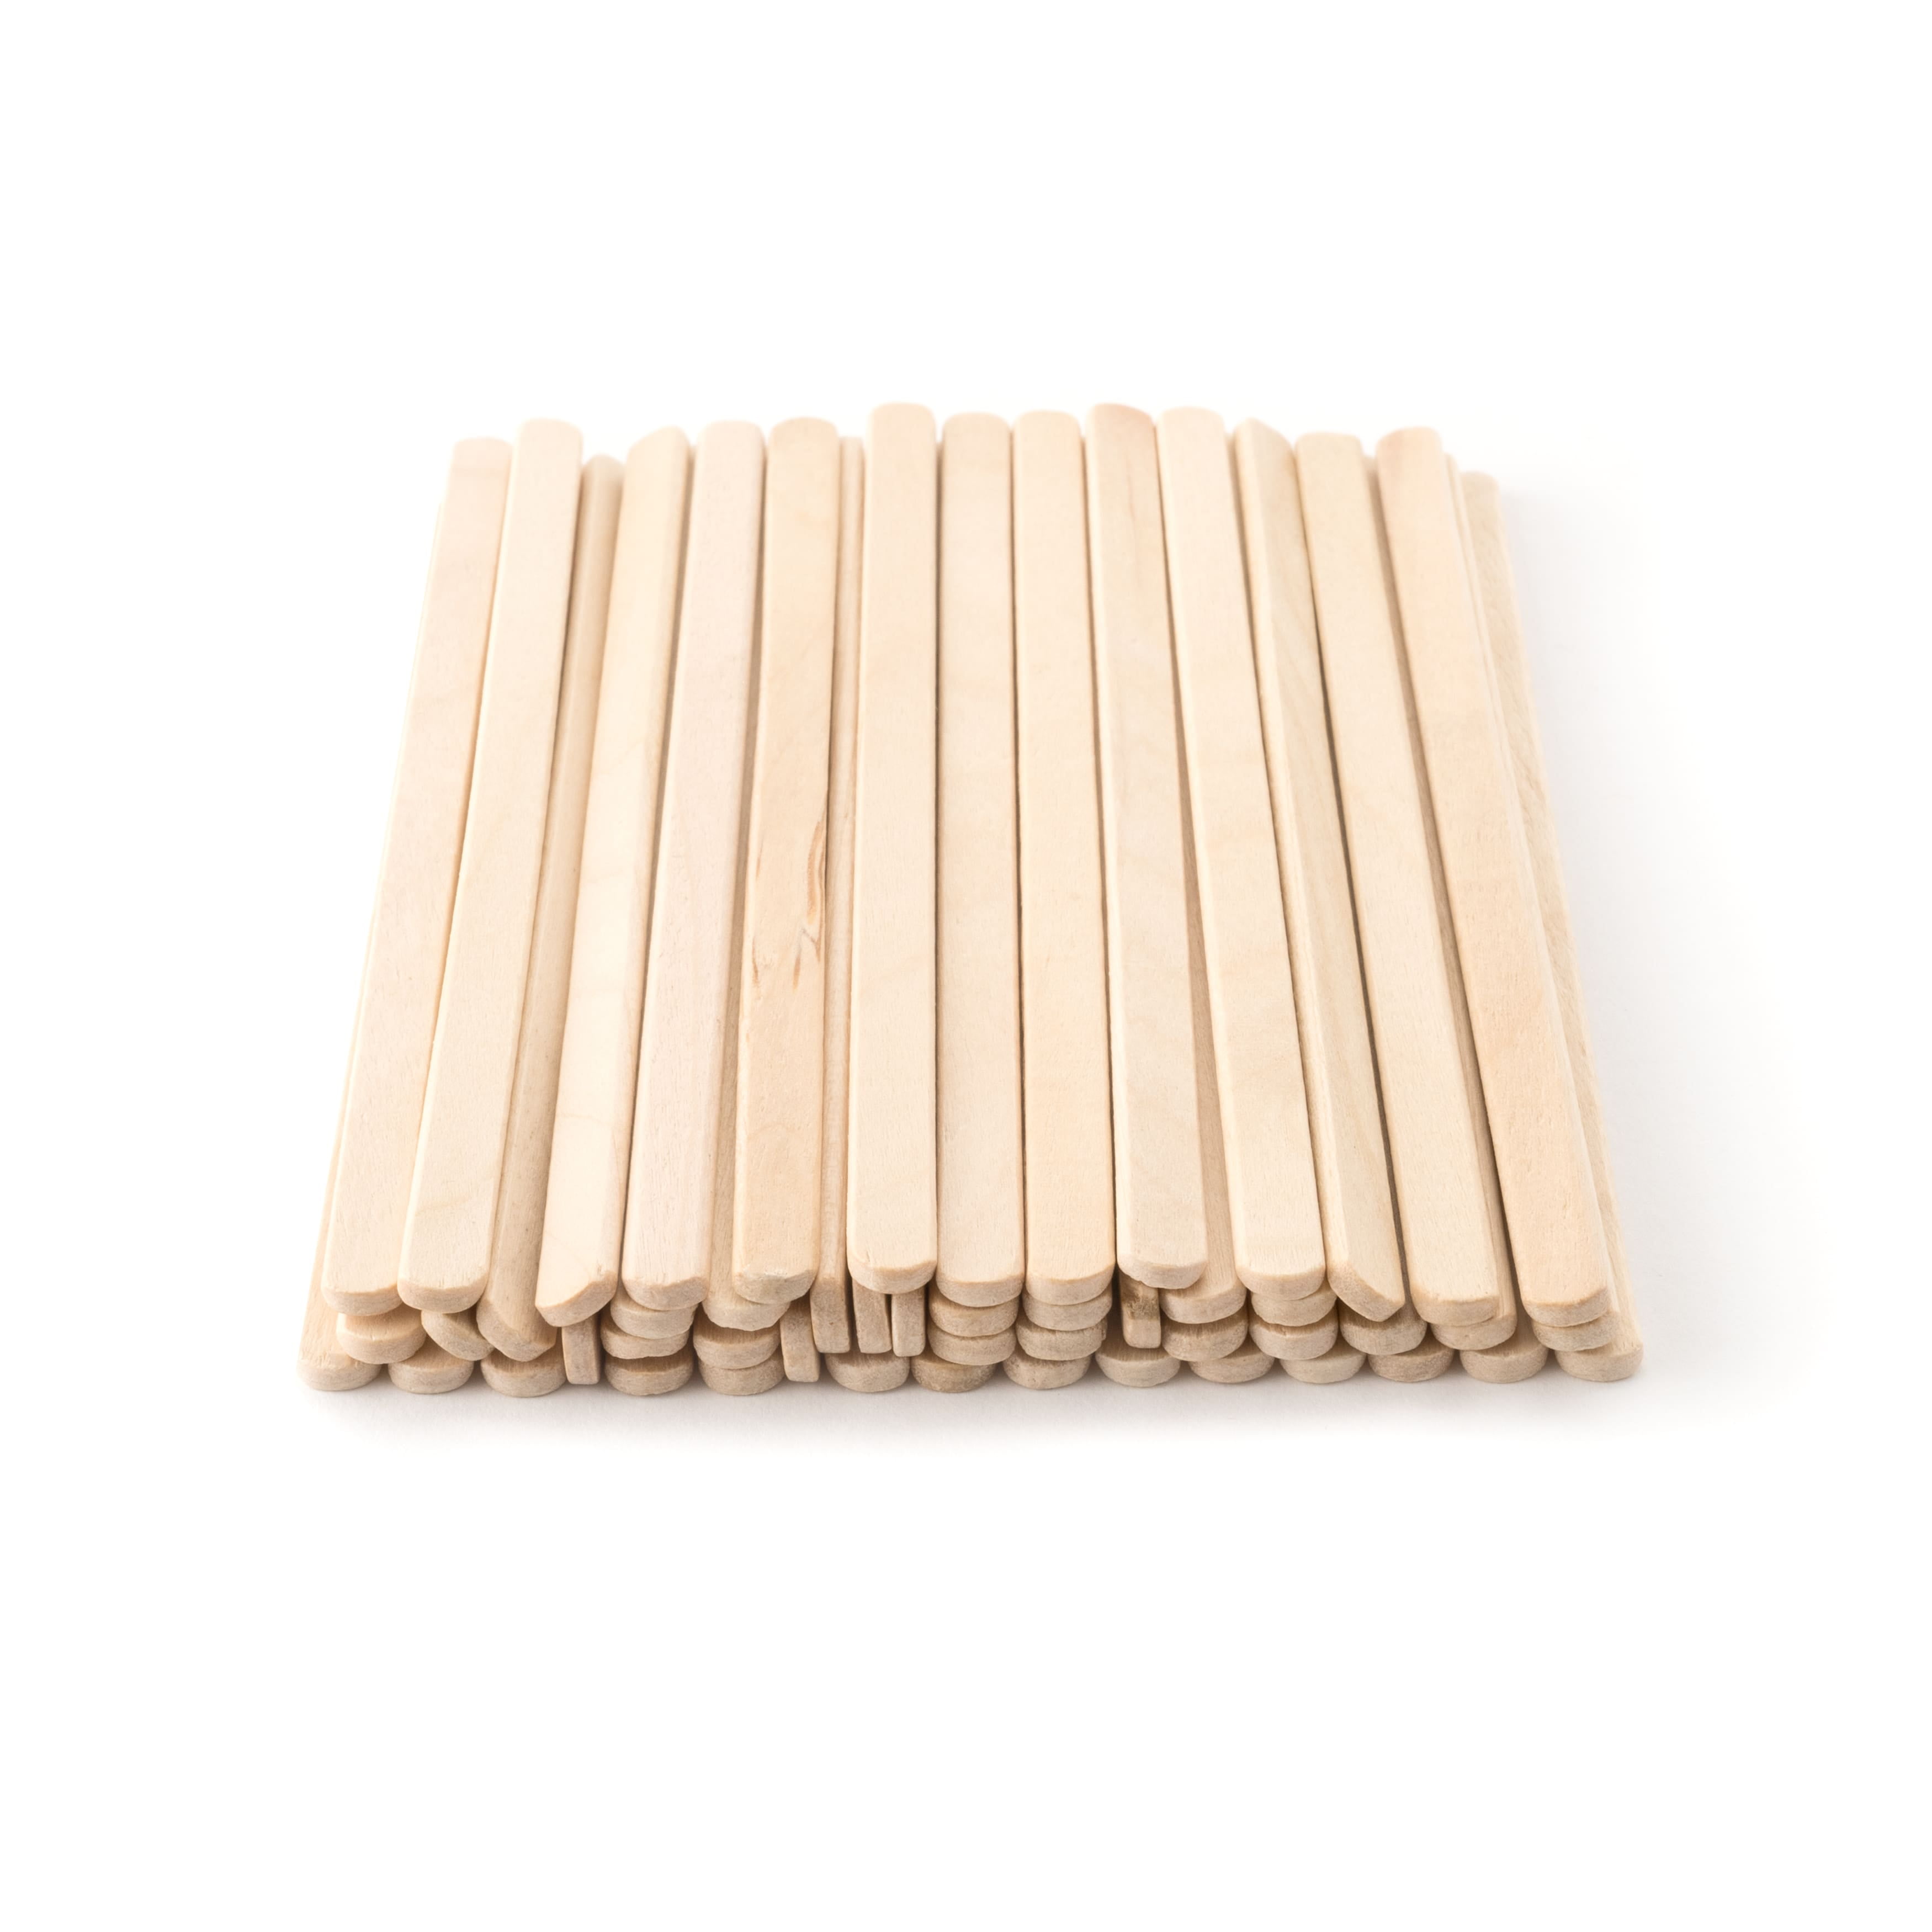 Loew-Cornell Woodsies Craft Sticks - Natural, 150 ct - Kroger